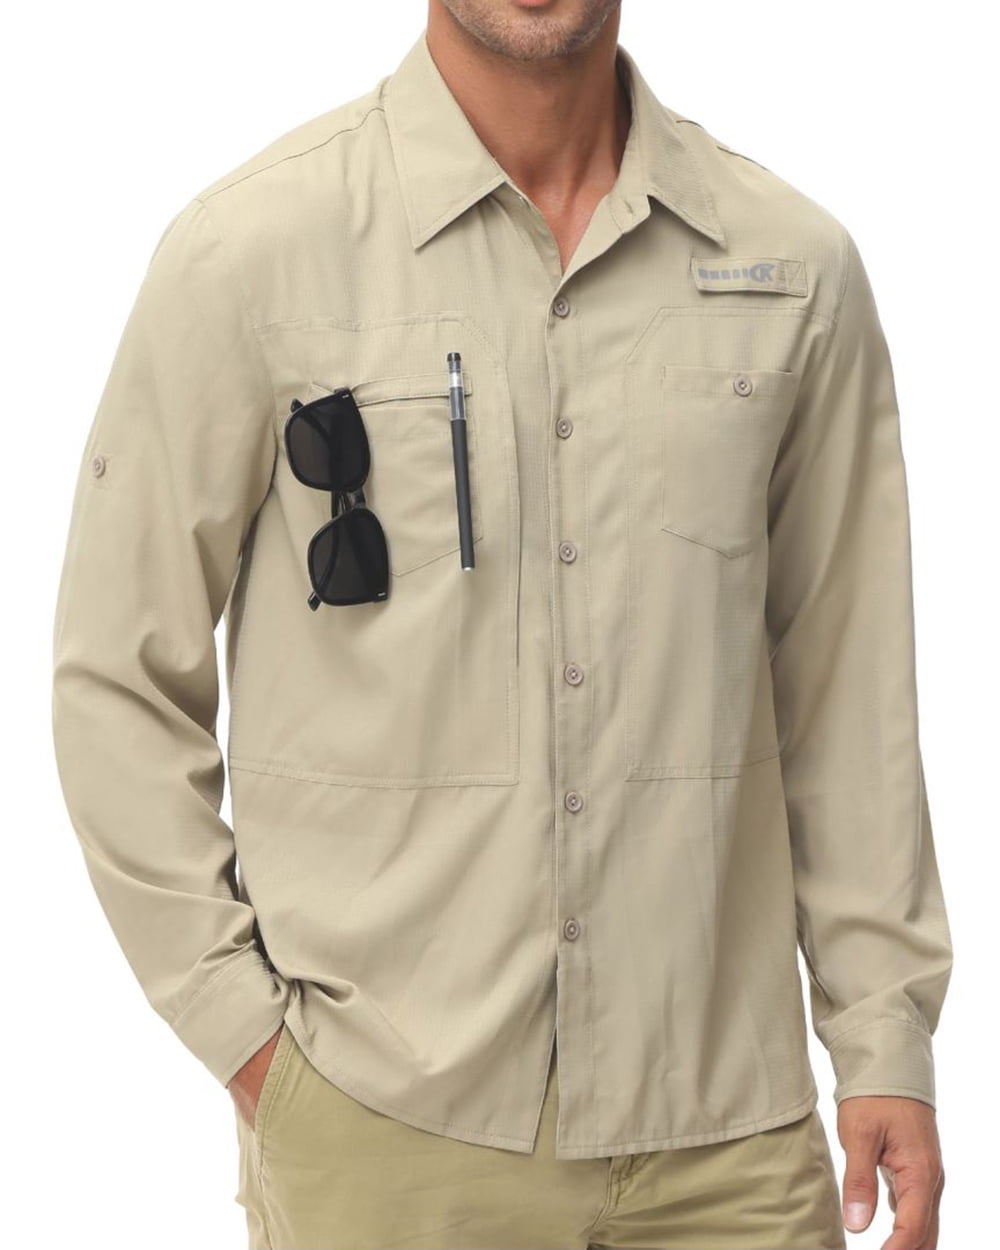 Mens Performance Short Sleeve Button Up Quick Dry Shirt 50+ UPF Fishing  Shirt, White, Size: 3X, Momentum Comfort Gear 